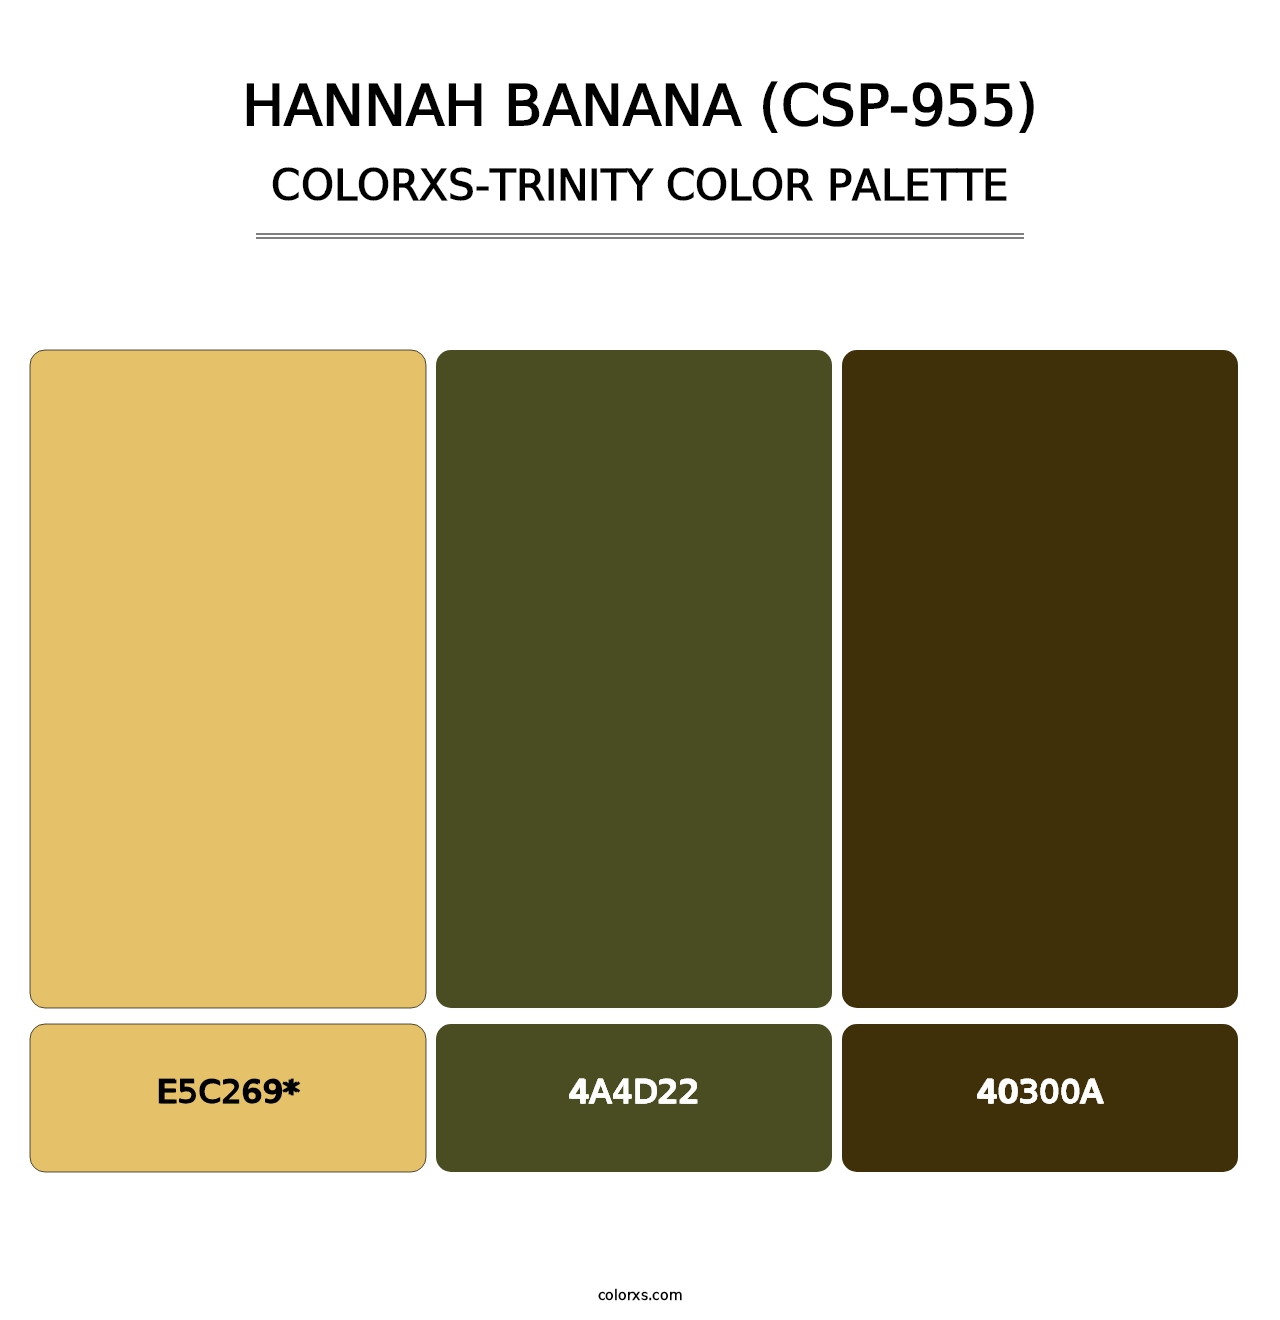 Hannah Banana (CSP-955) - Colorxs Trinity Palette